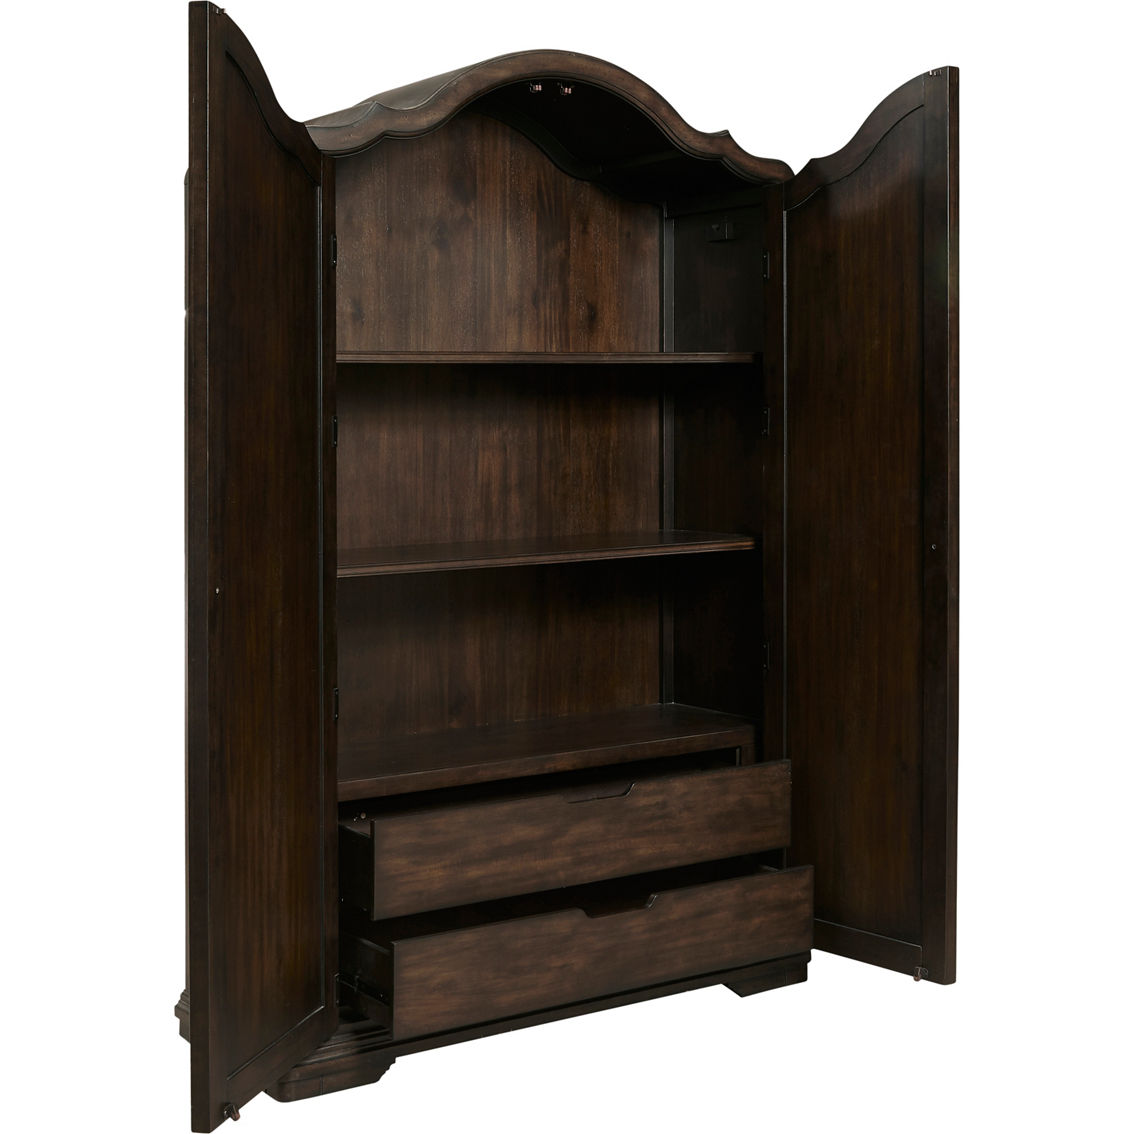 Pulaski Furniture Cooper Falls 2 Door Armoire with Drawers - Image 3 of 6